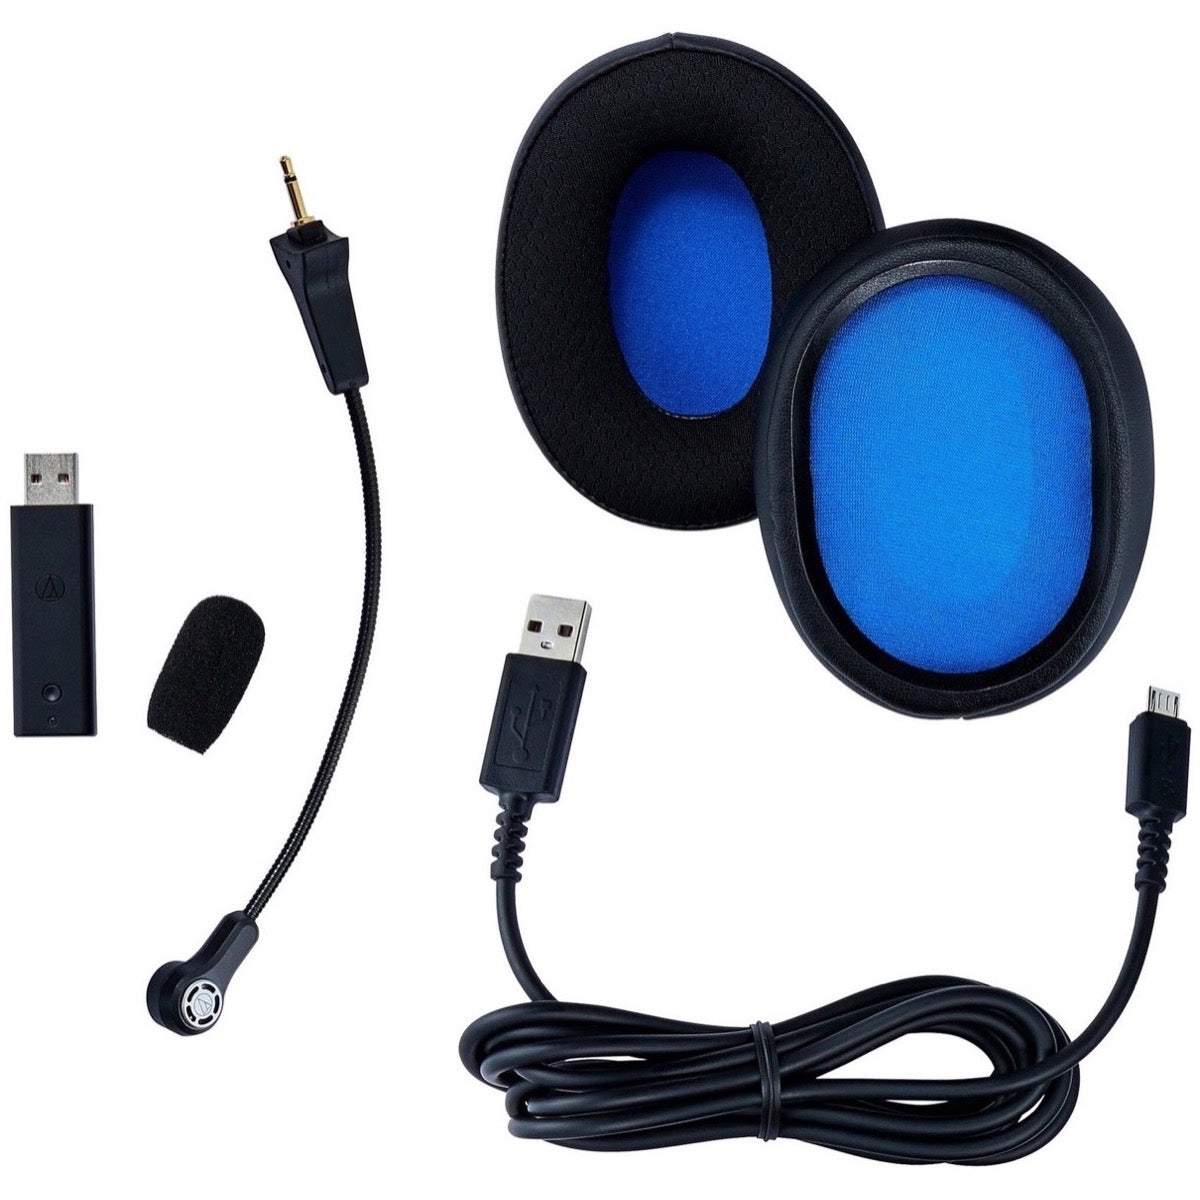 Audio-Technica ATH-G1WL Premium Gaming Microphone Headset